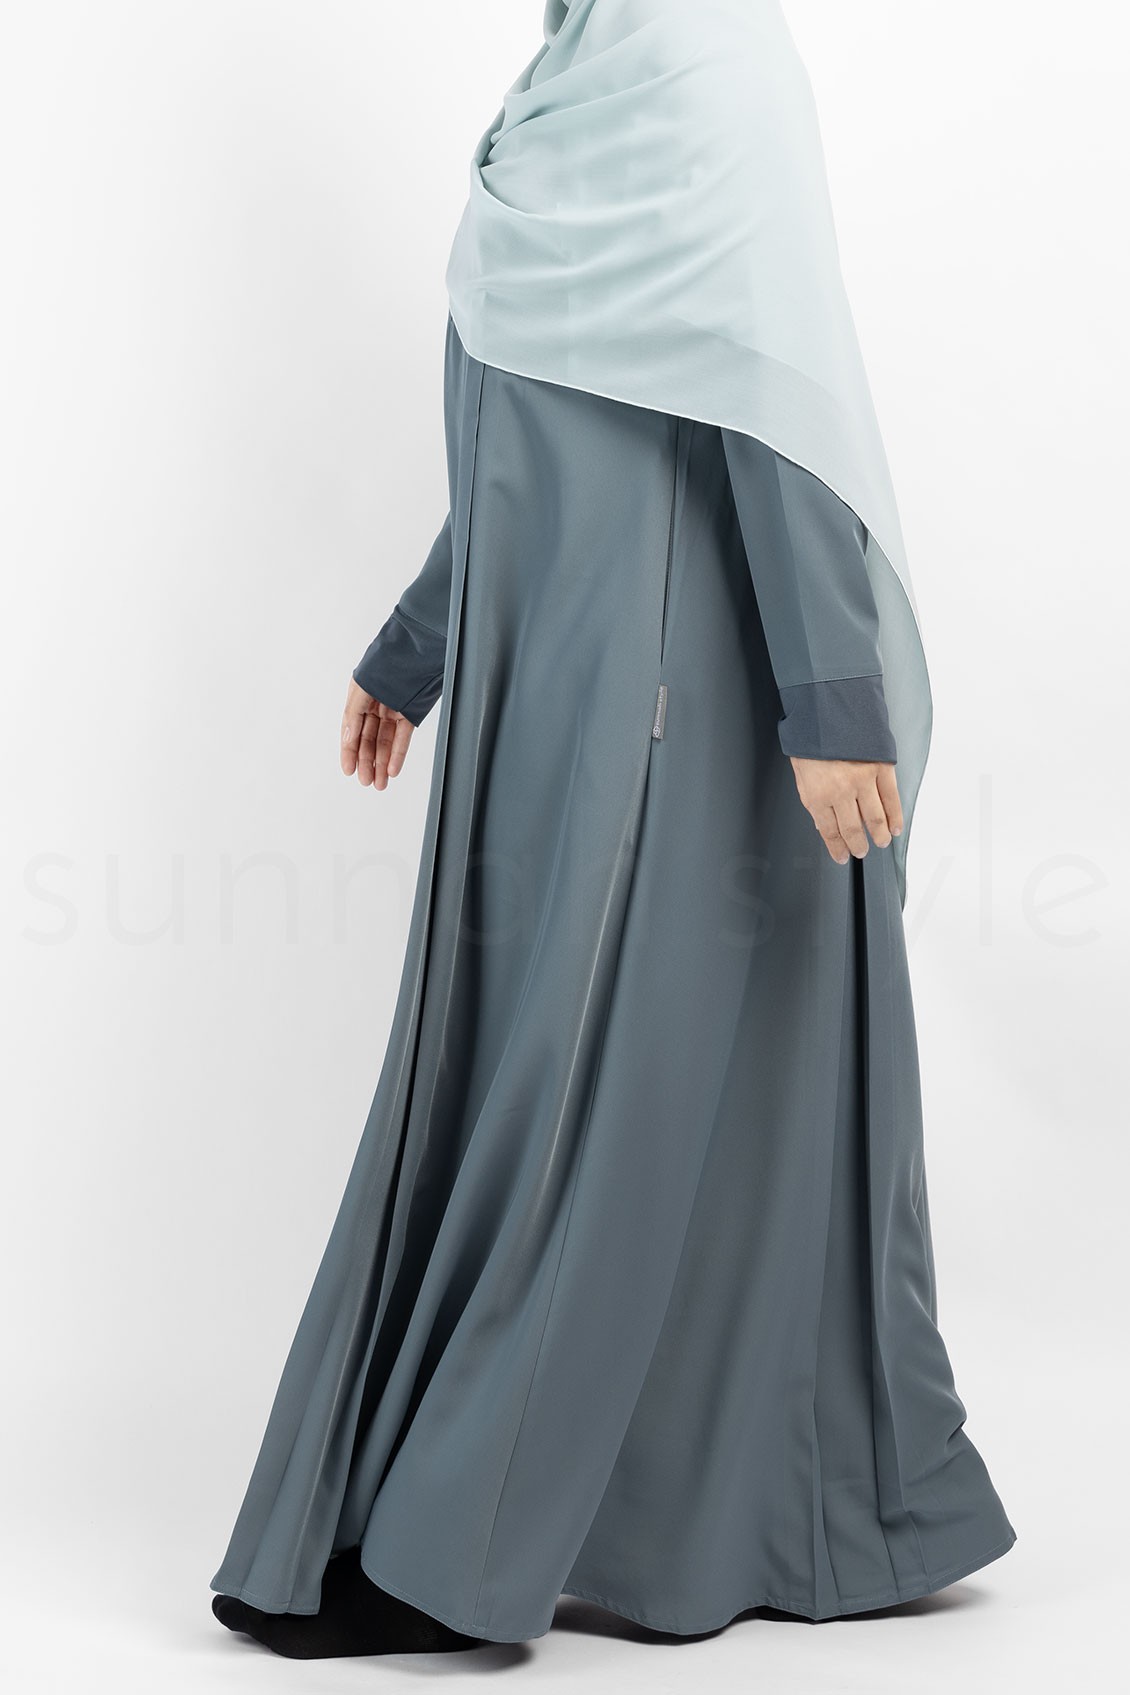 Sunnah Style Belle Umbrella Abaya River